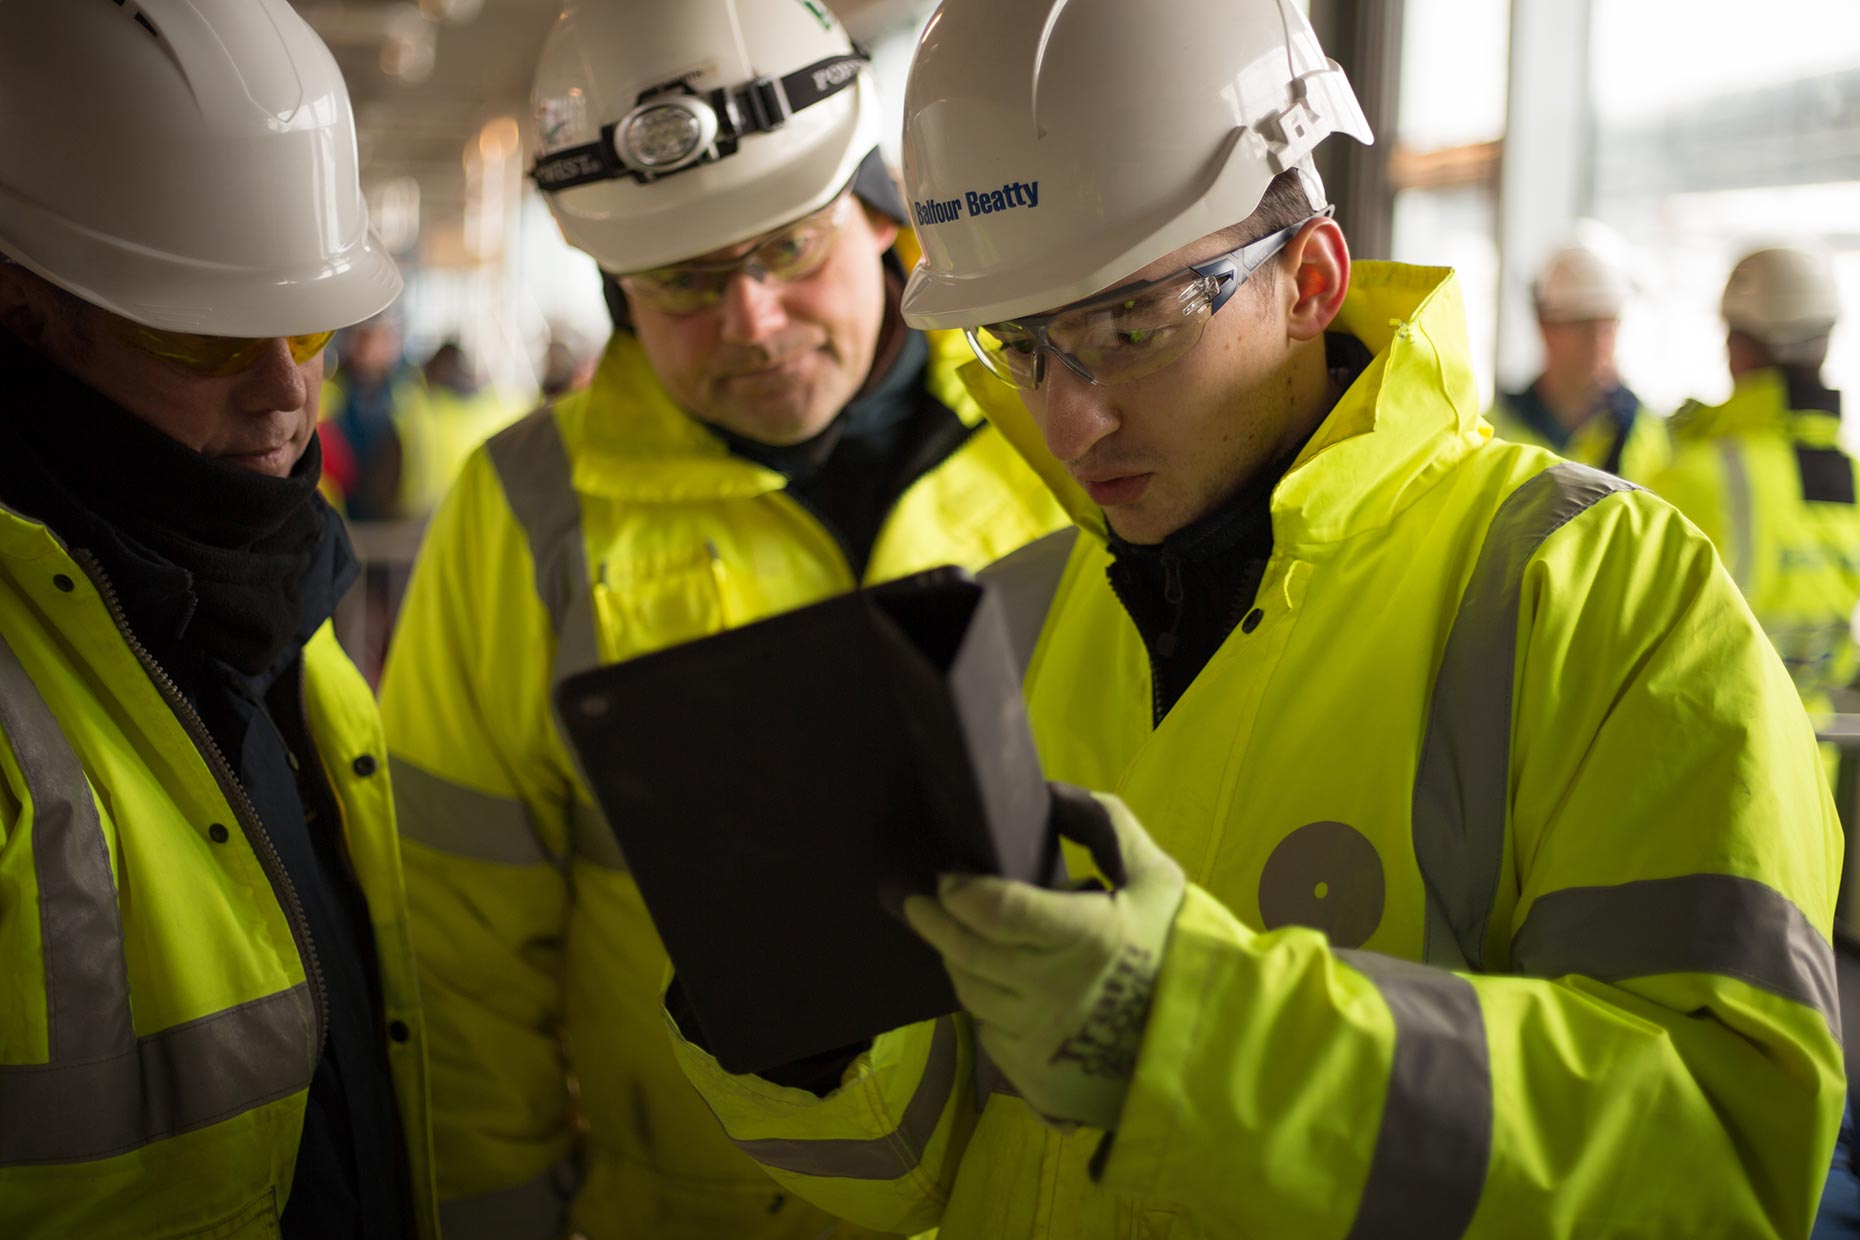 Corporate workers engineers in high-viz vests examine an ipad.